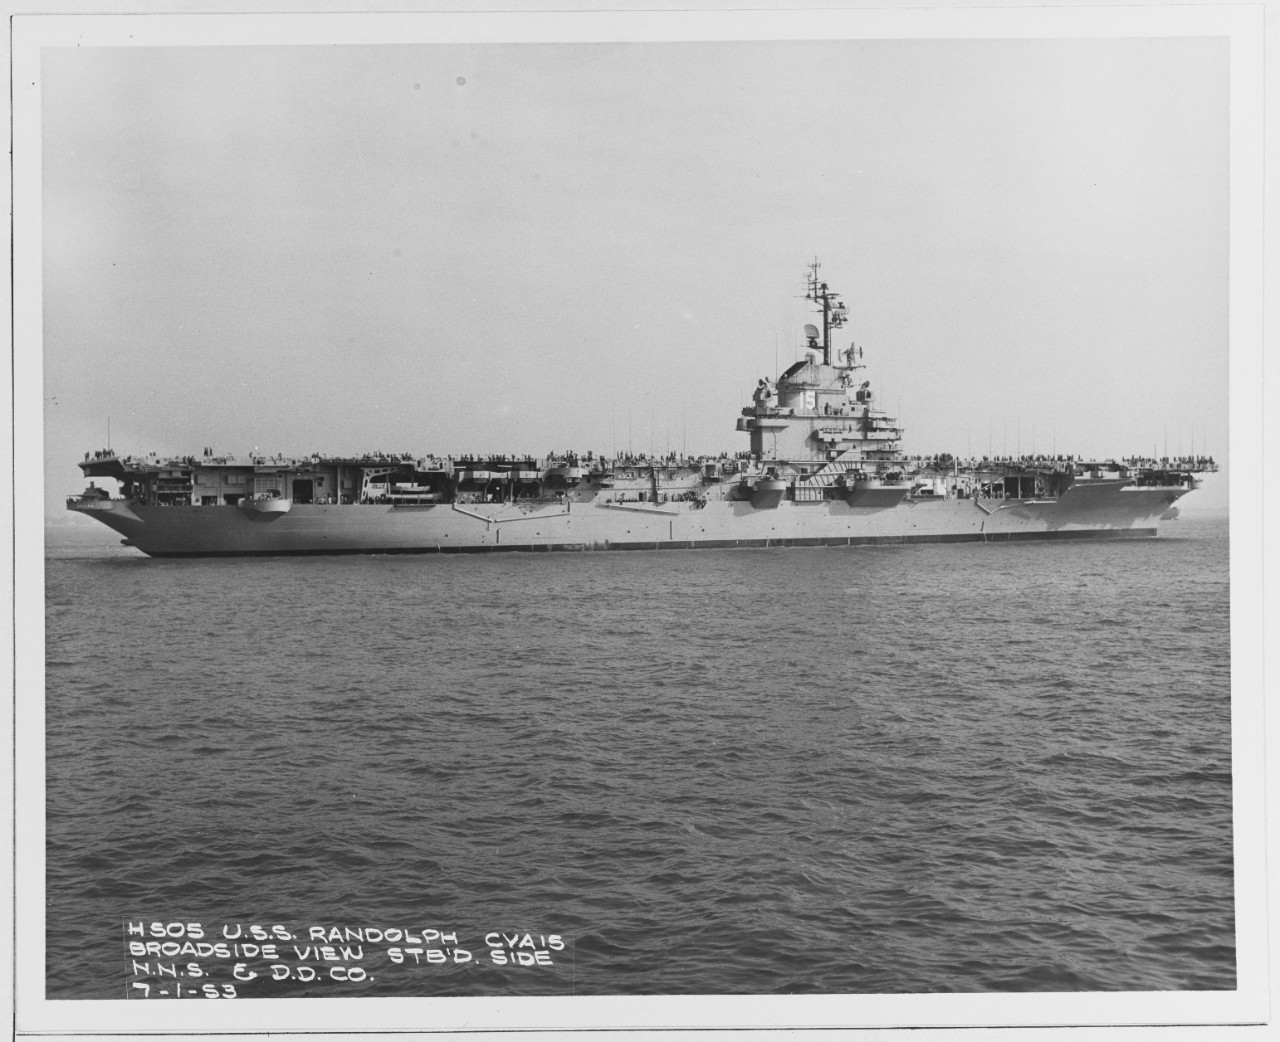 USS RANDOLPH (CVA 15)